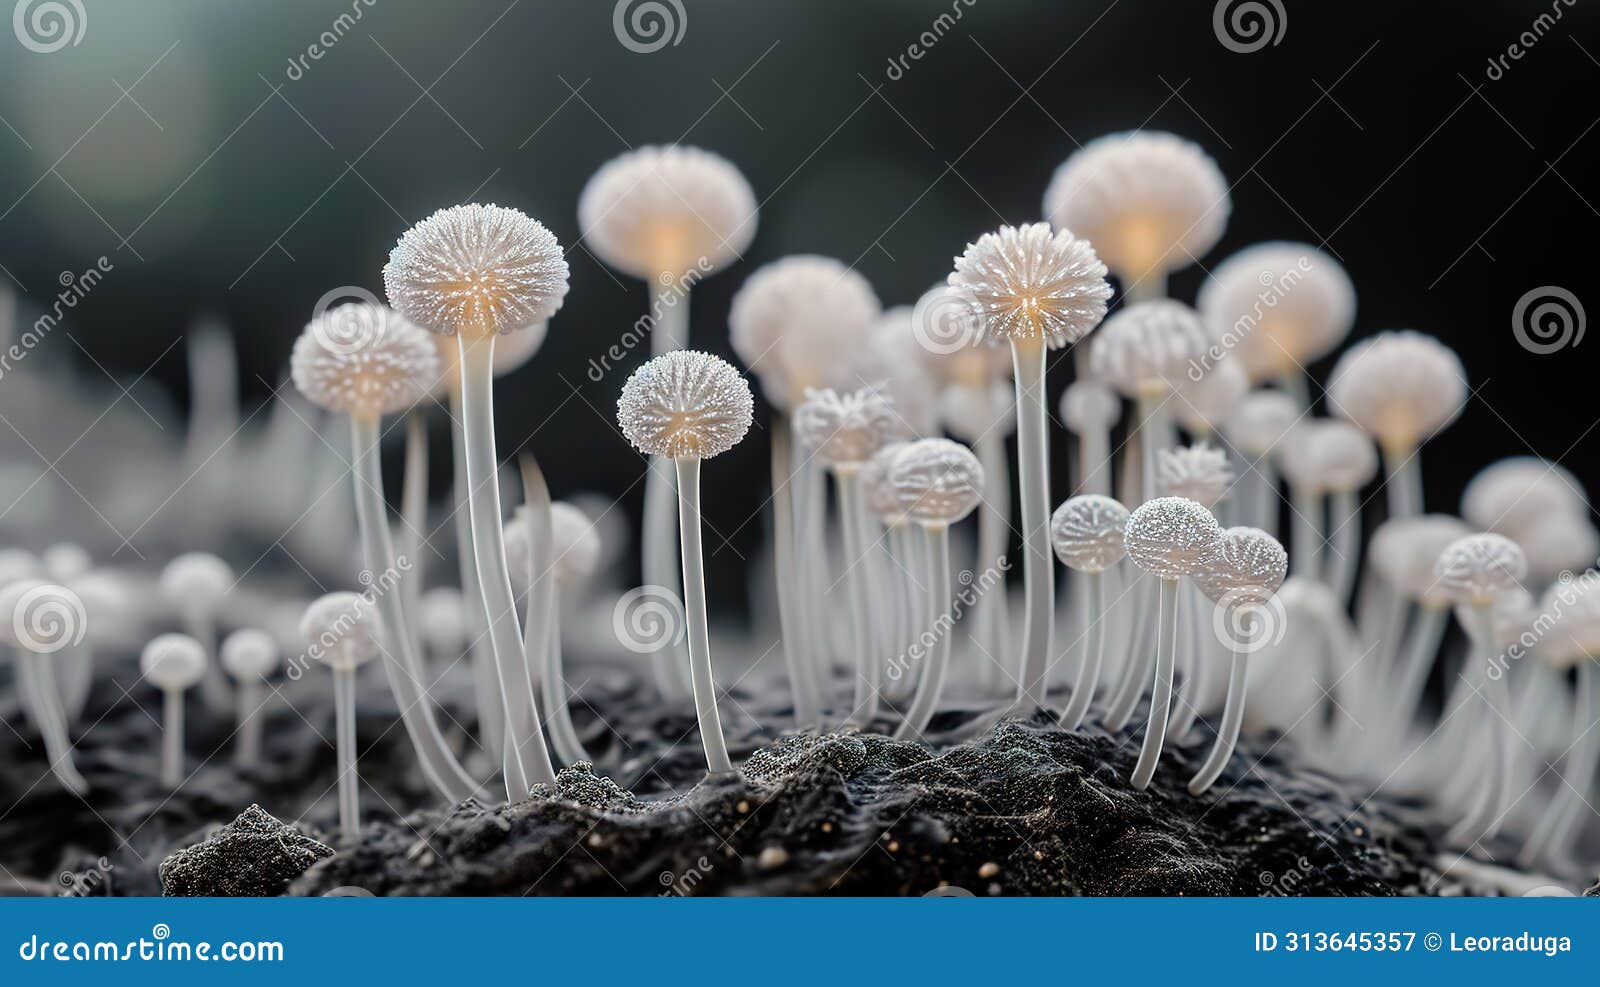 aspergillus fumigatus under the microscope. a species of higher mold fungi of the genus aspergillus, a saprophyte and pathogen for